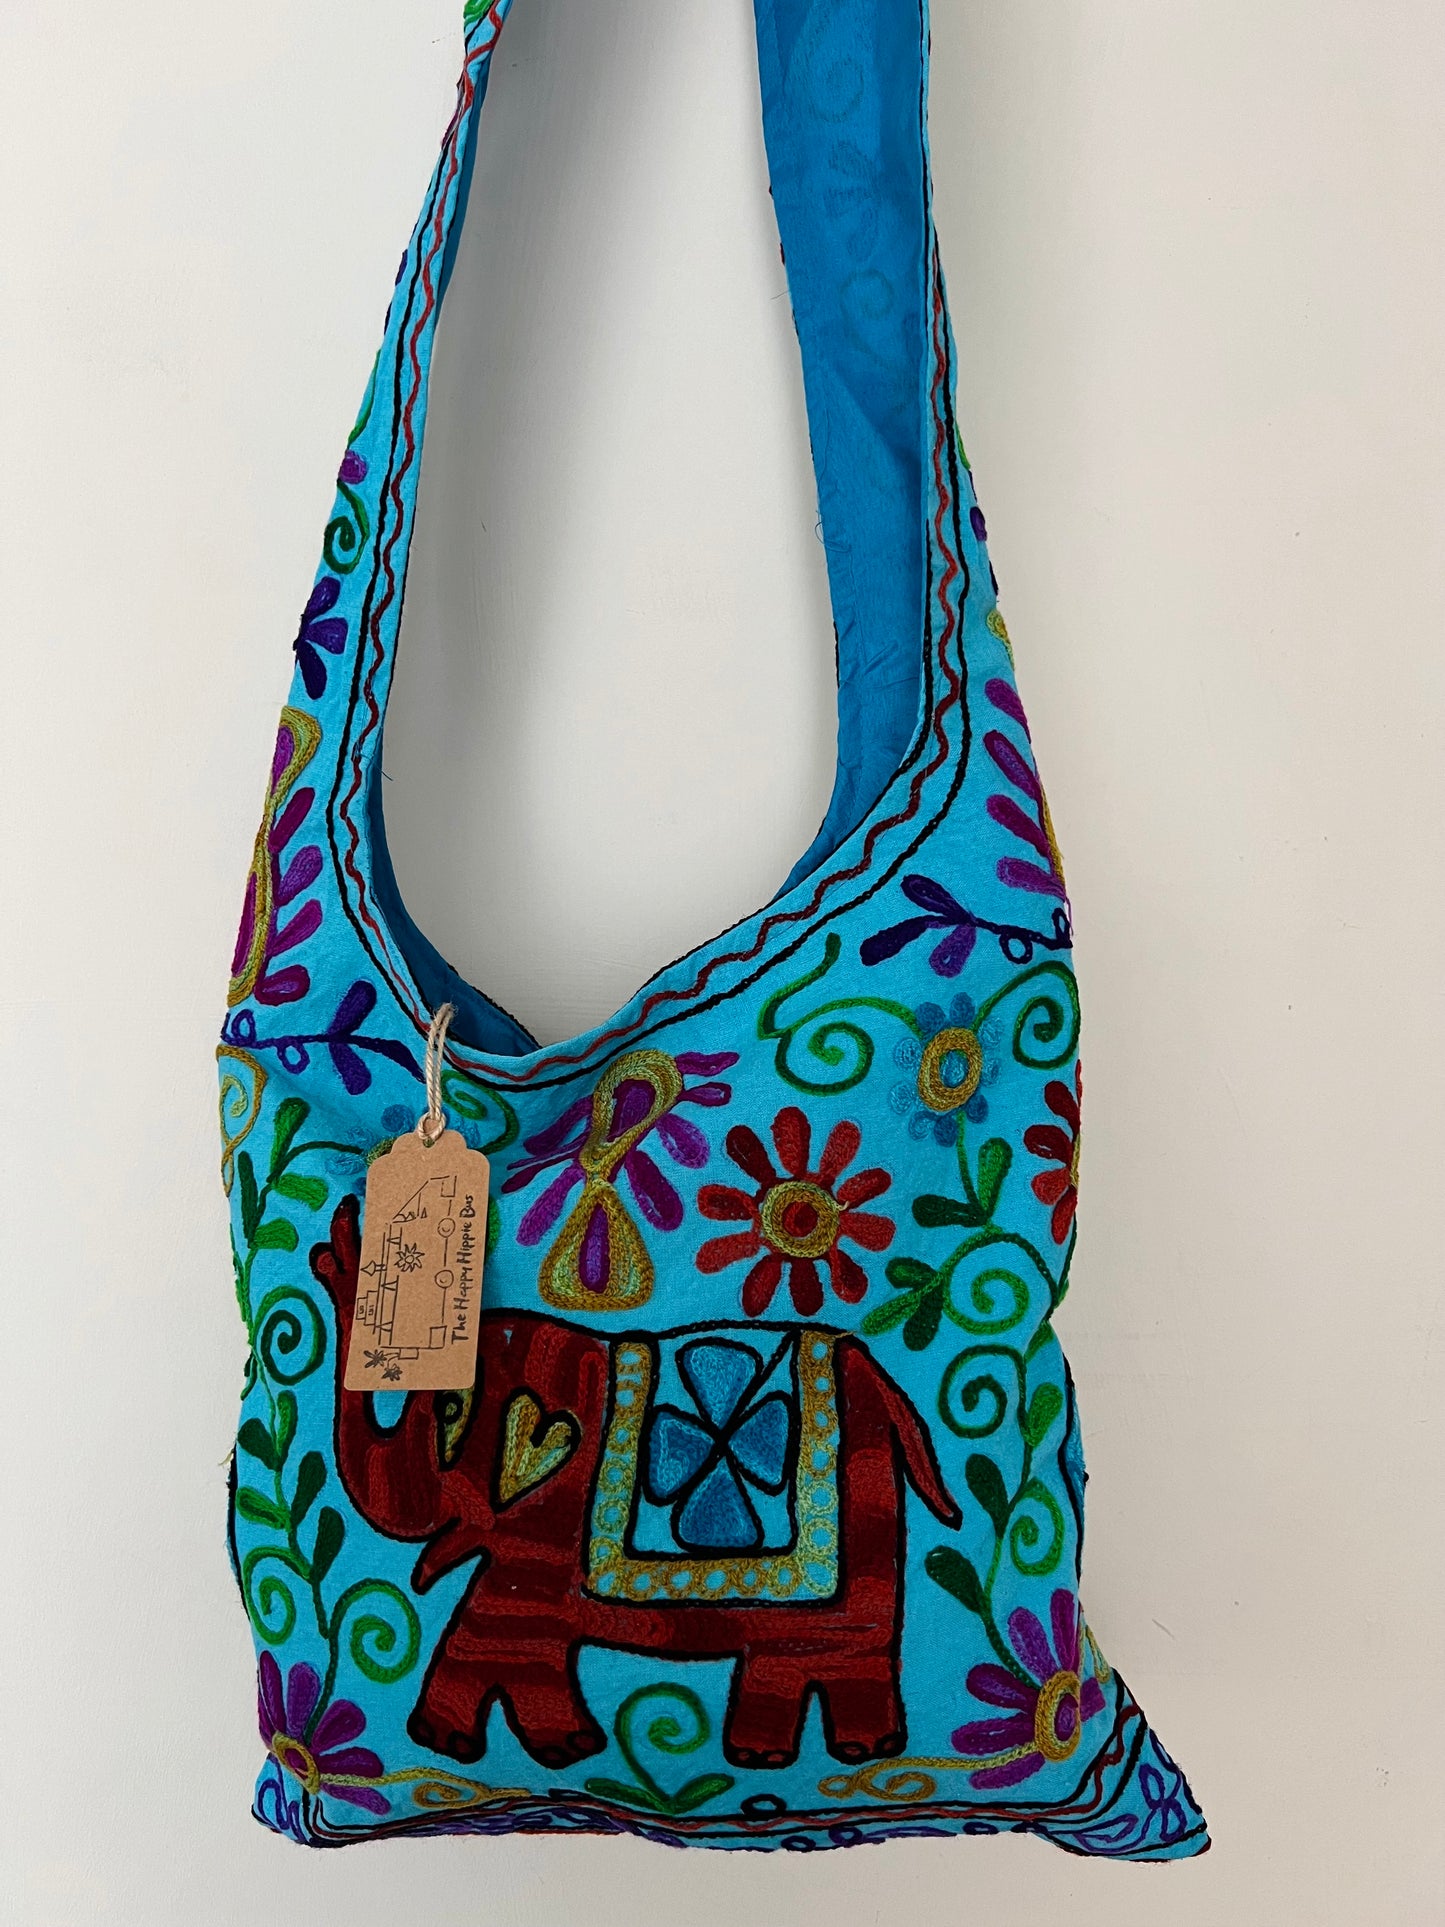 Handmade, Fair Trade, Embroidered, Indian, Elephant, Hippie, Bohemian Shoulder Bag, Blue